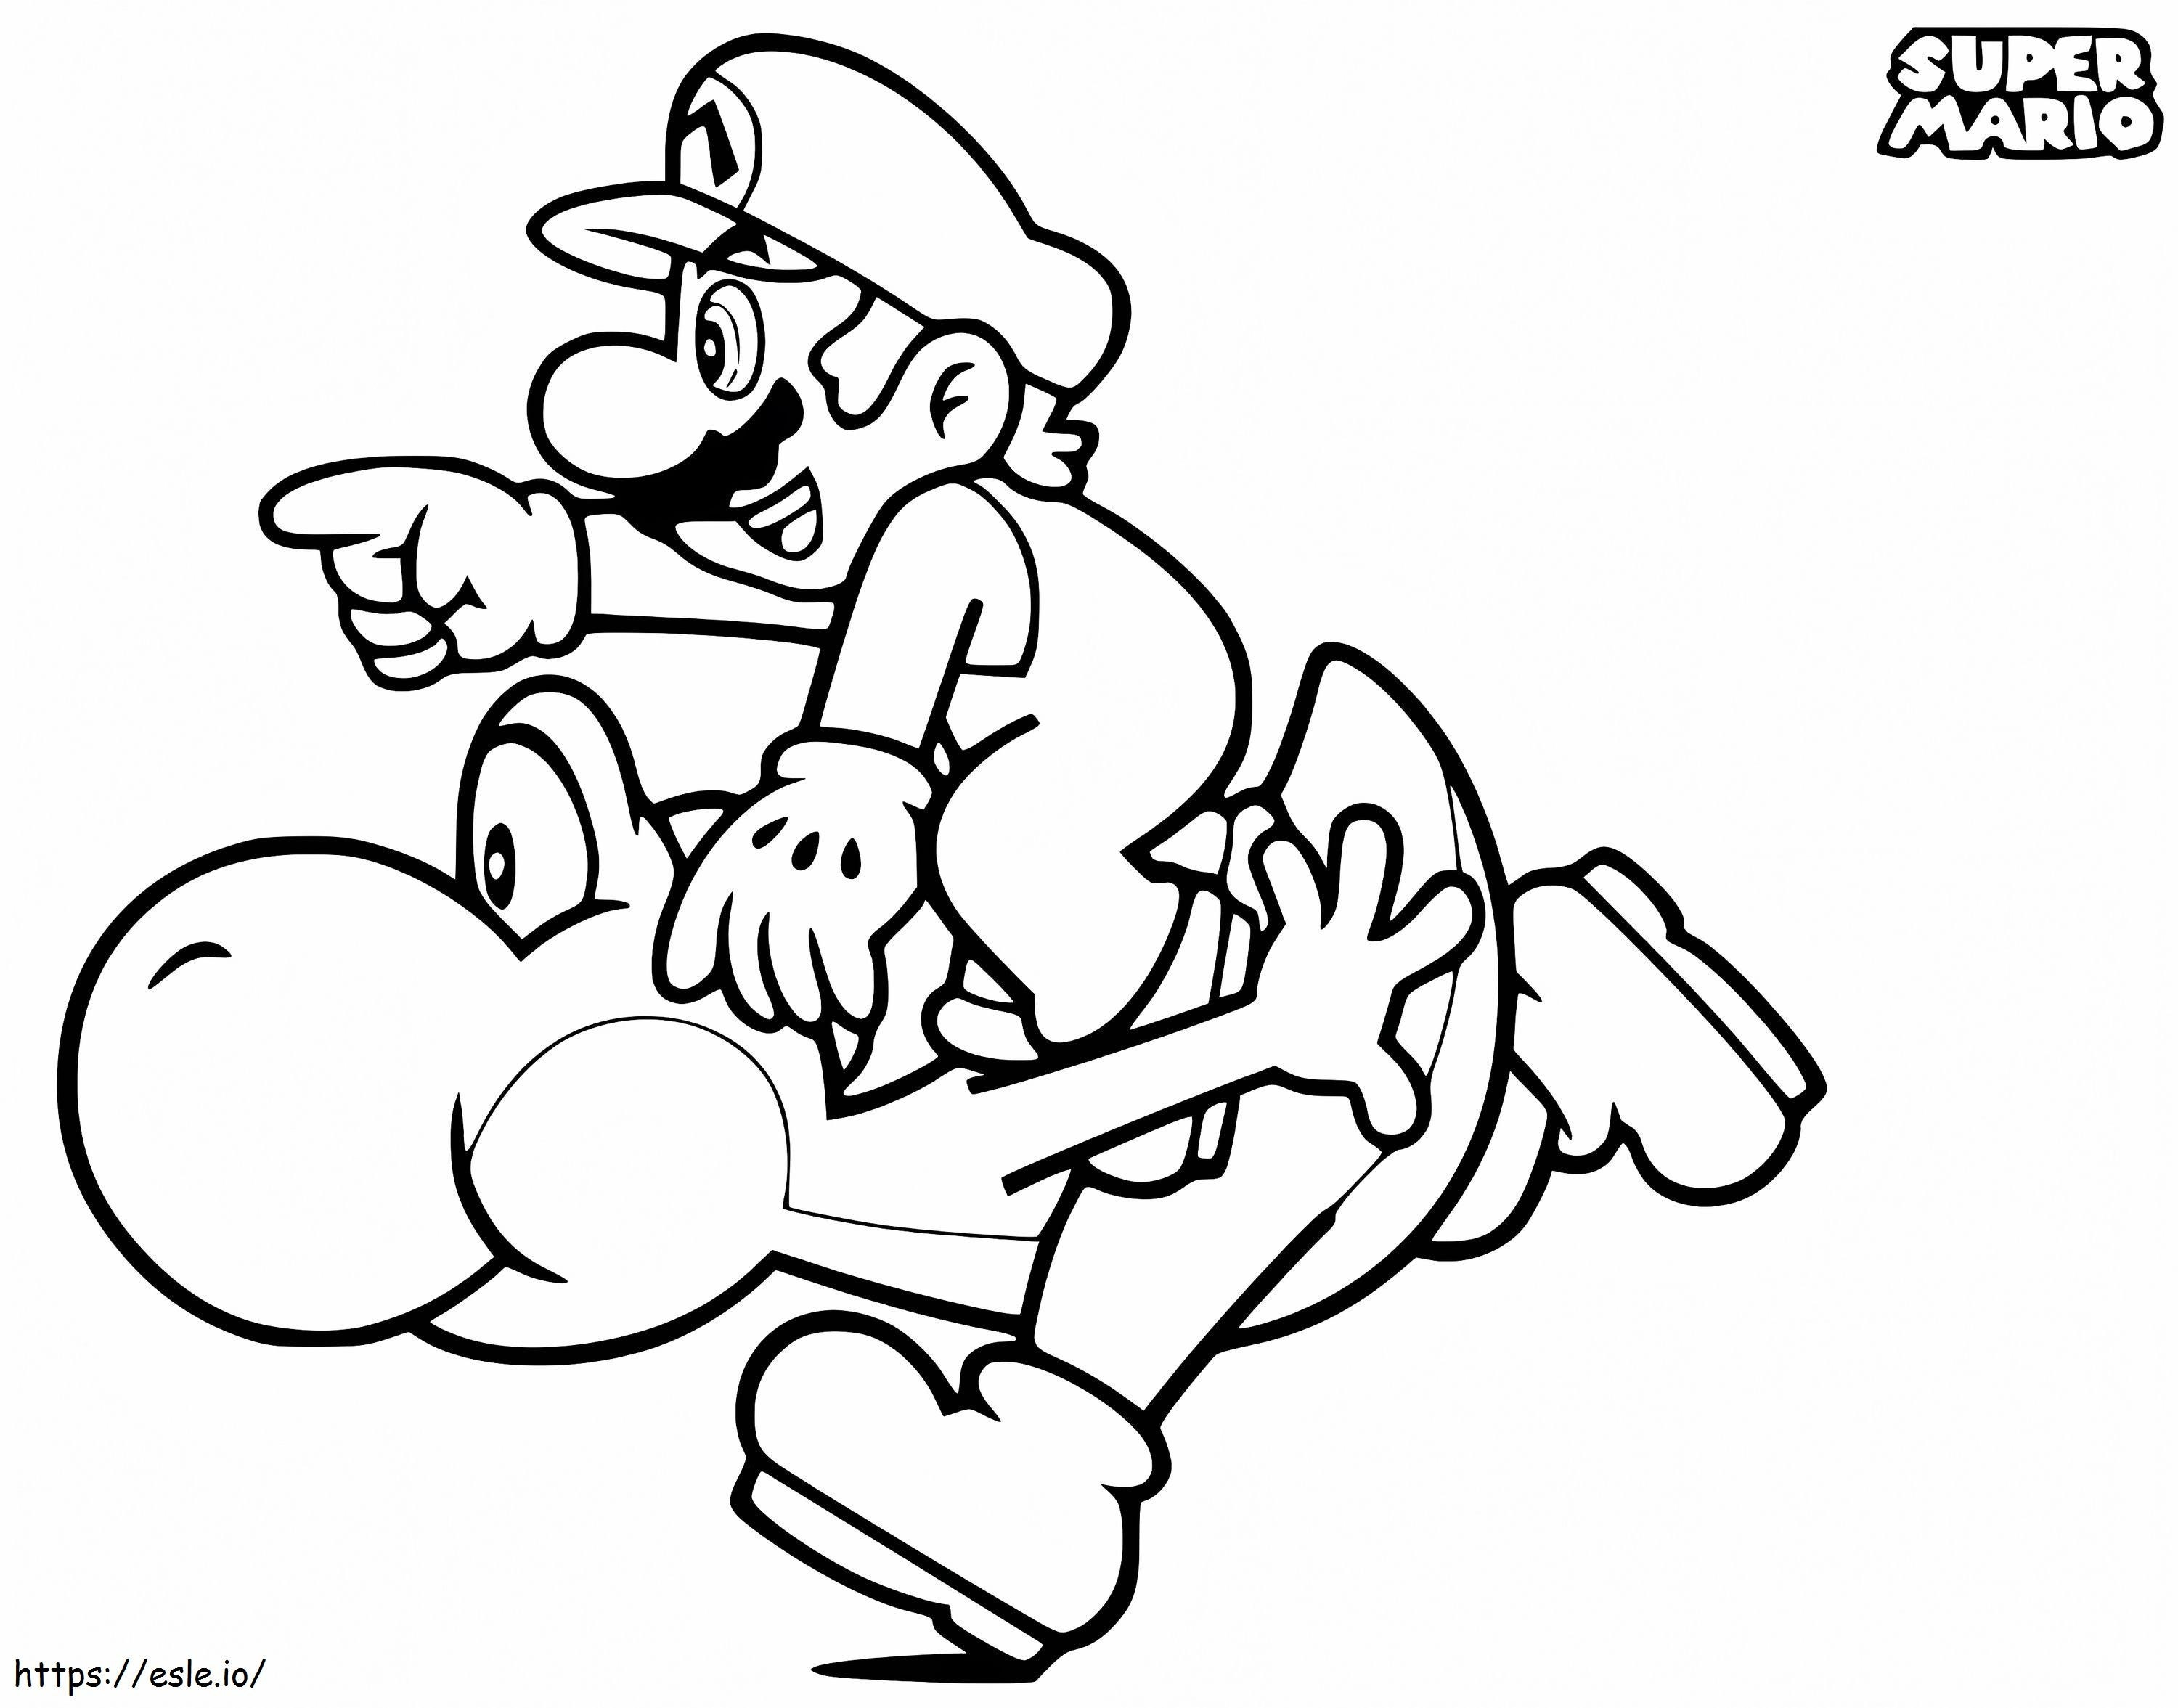 Coloriage Mario Et Yoshi à imprimer dessin